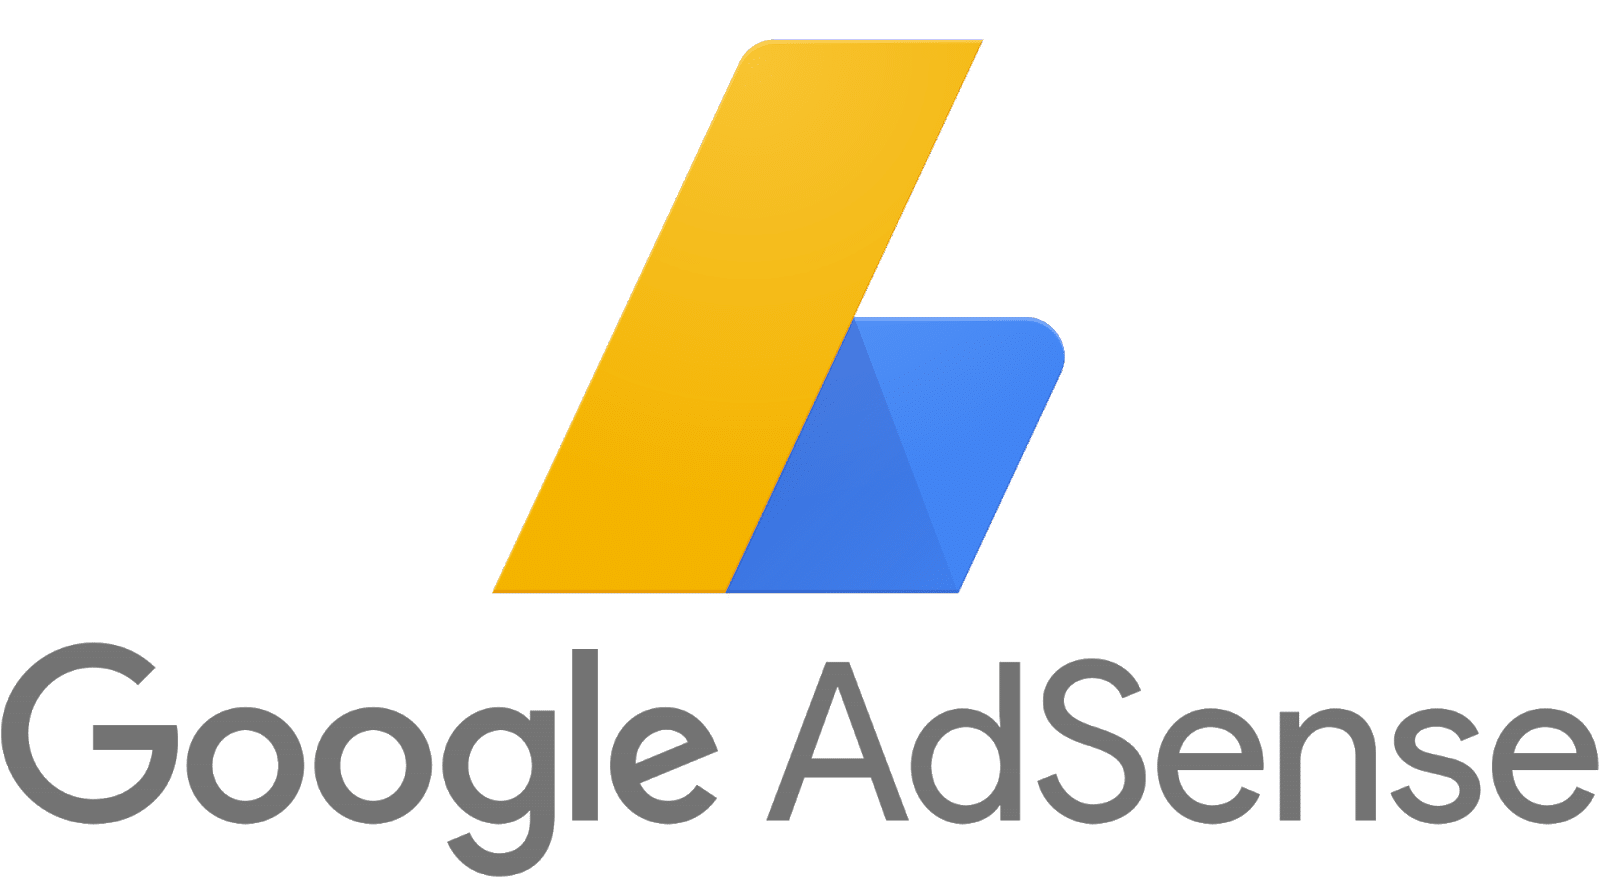 Google adsense logo